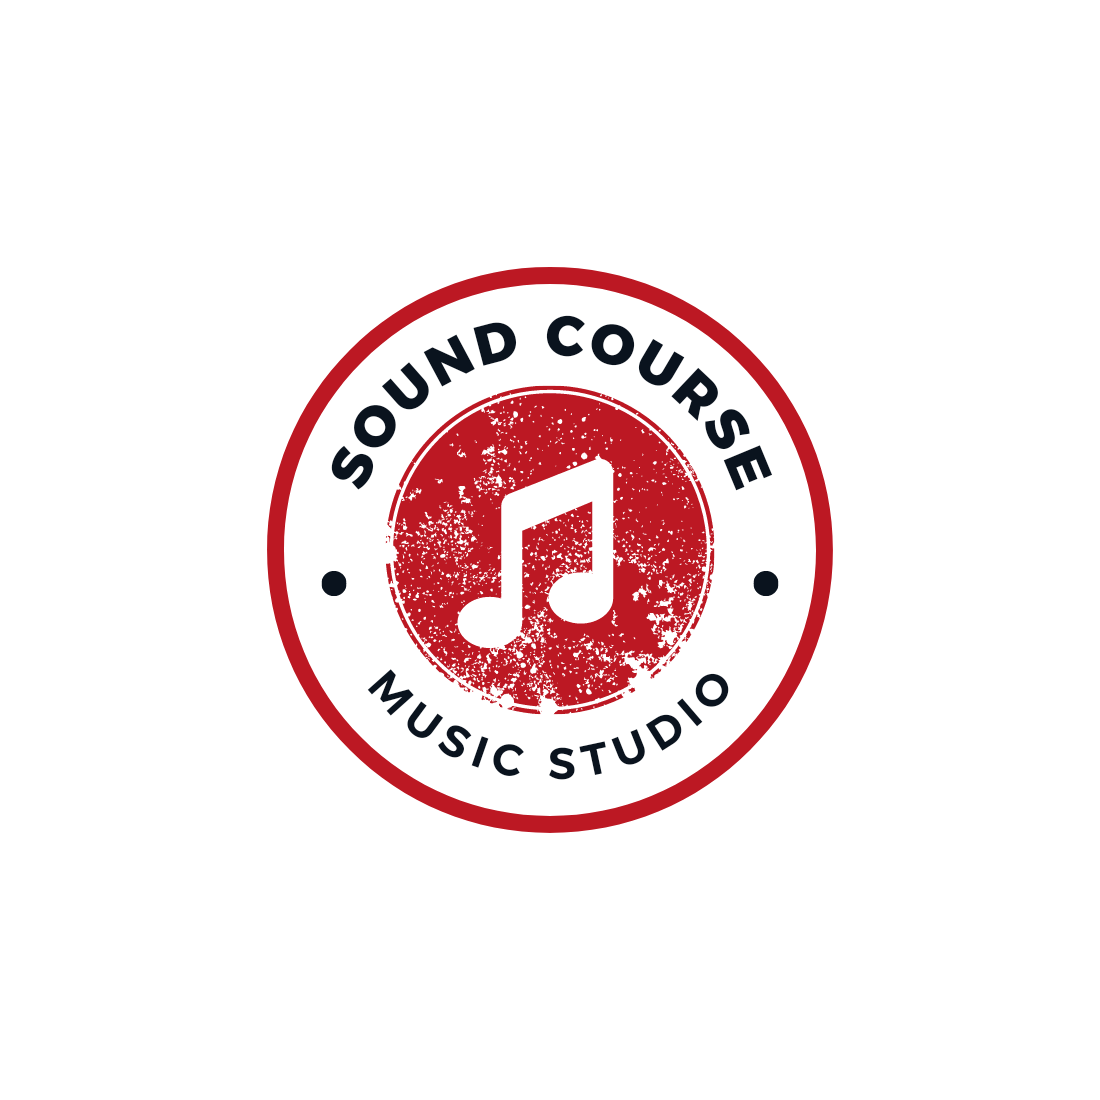 Premium Business Logo Designs Bundle Sound course example.